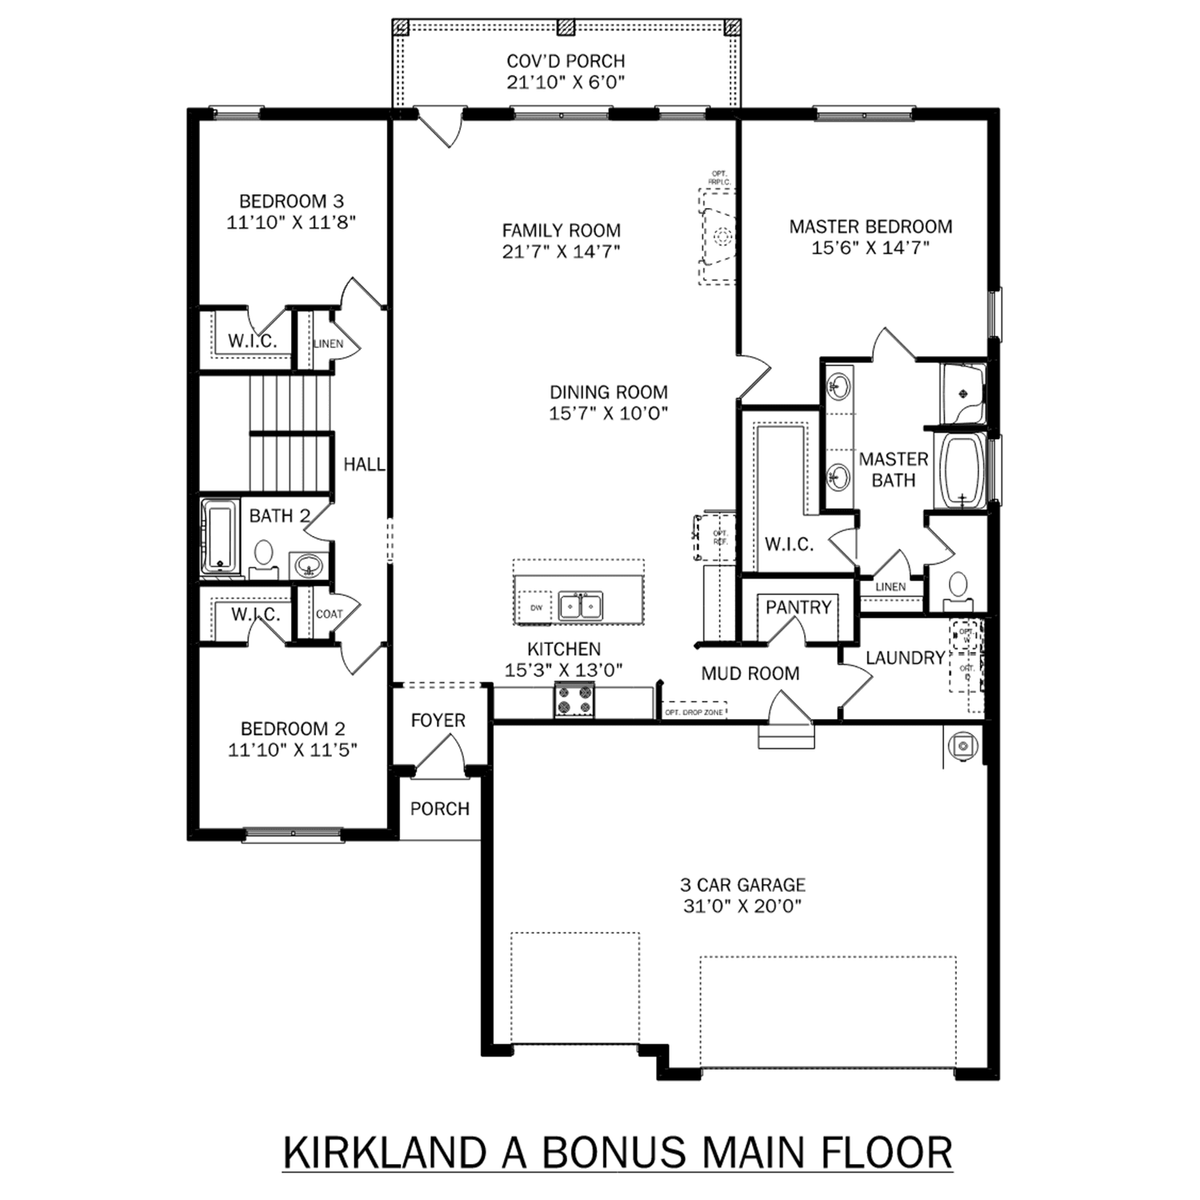 1 - The Kirkland with Bonus buildable floor plan layout in Davidson Homes' Barnett's Crossing community.